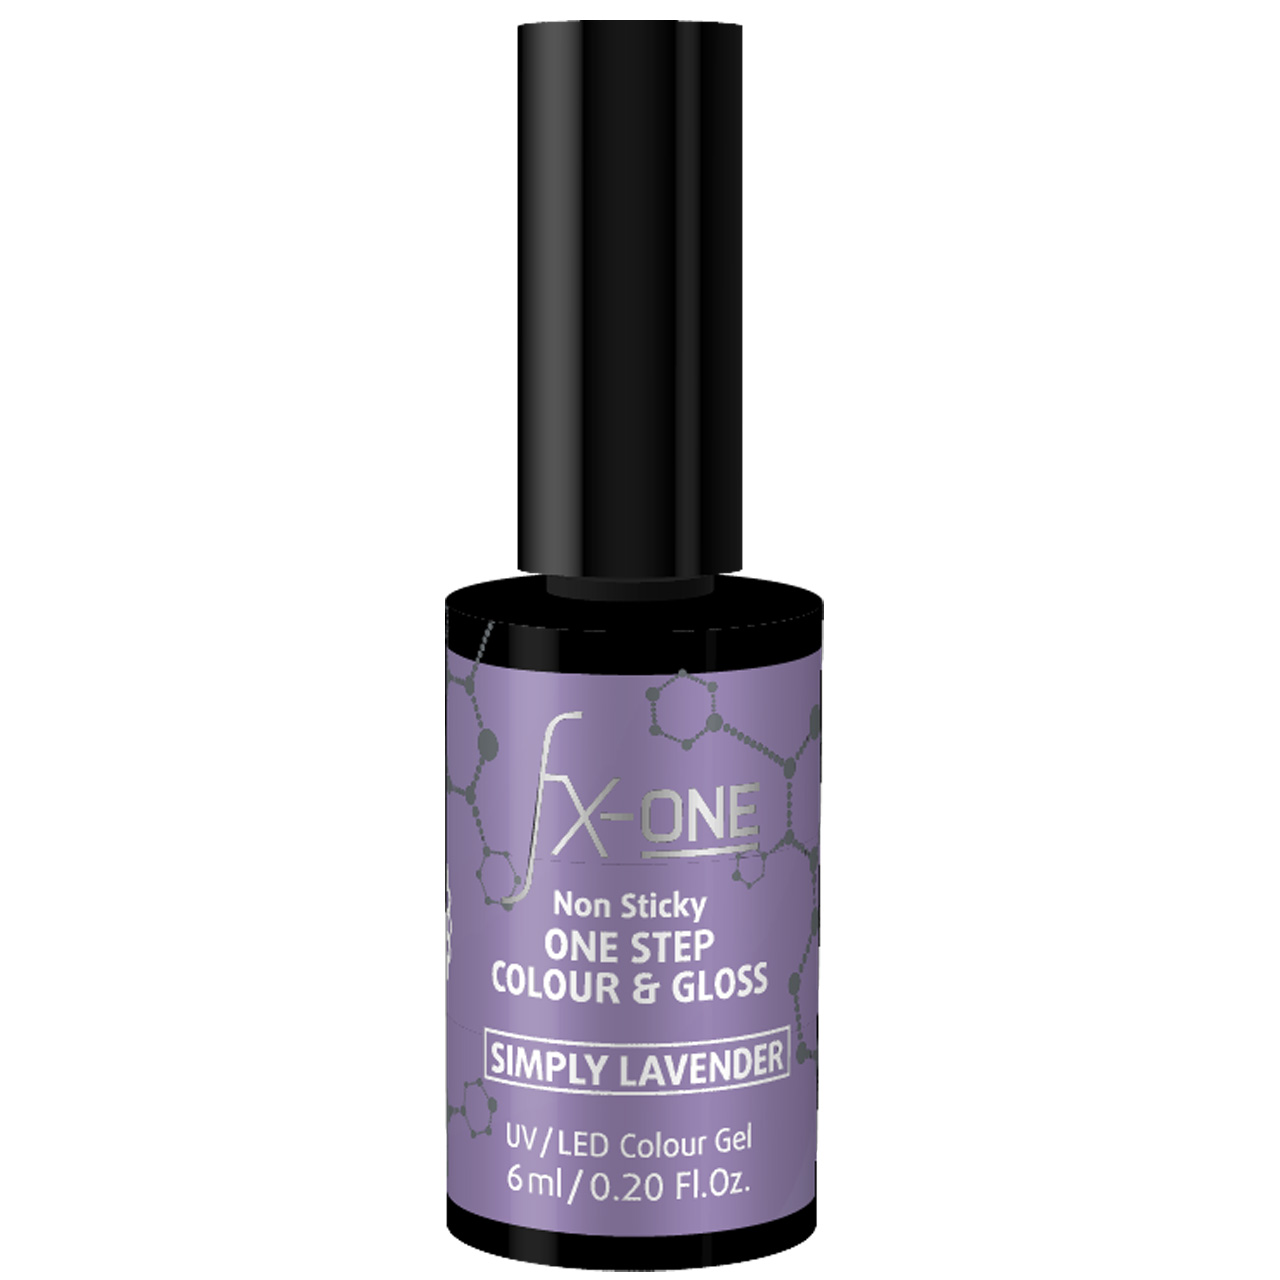 FX-One Colour & Gloss Simply Lavender